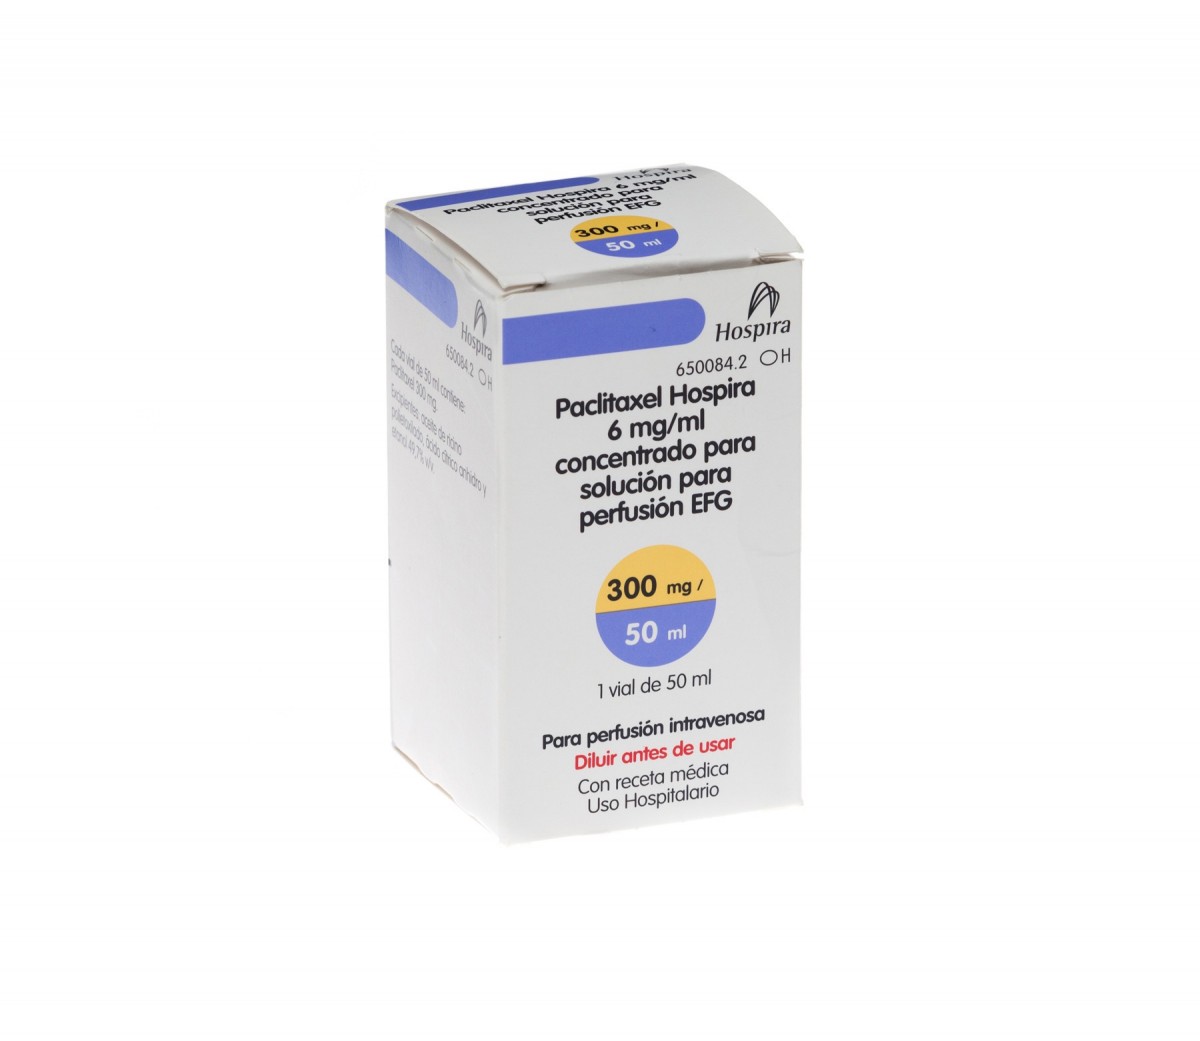 PACLITAXEL HOSPIRA 6 mg/ml CONCENTRADO PARA SOLUCION PARA PERFUSION EFG , 1 vial de 16,7 ml fotografía del envase.